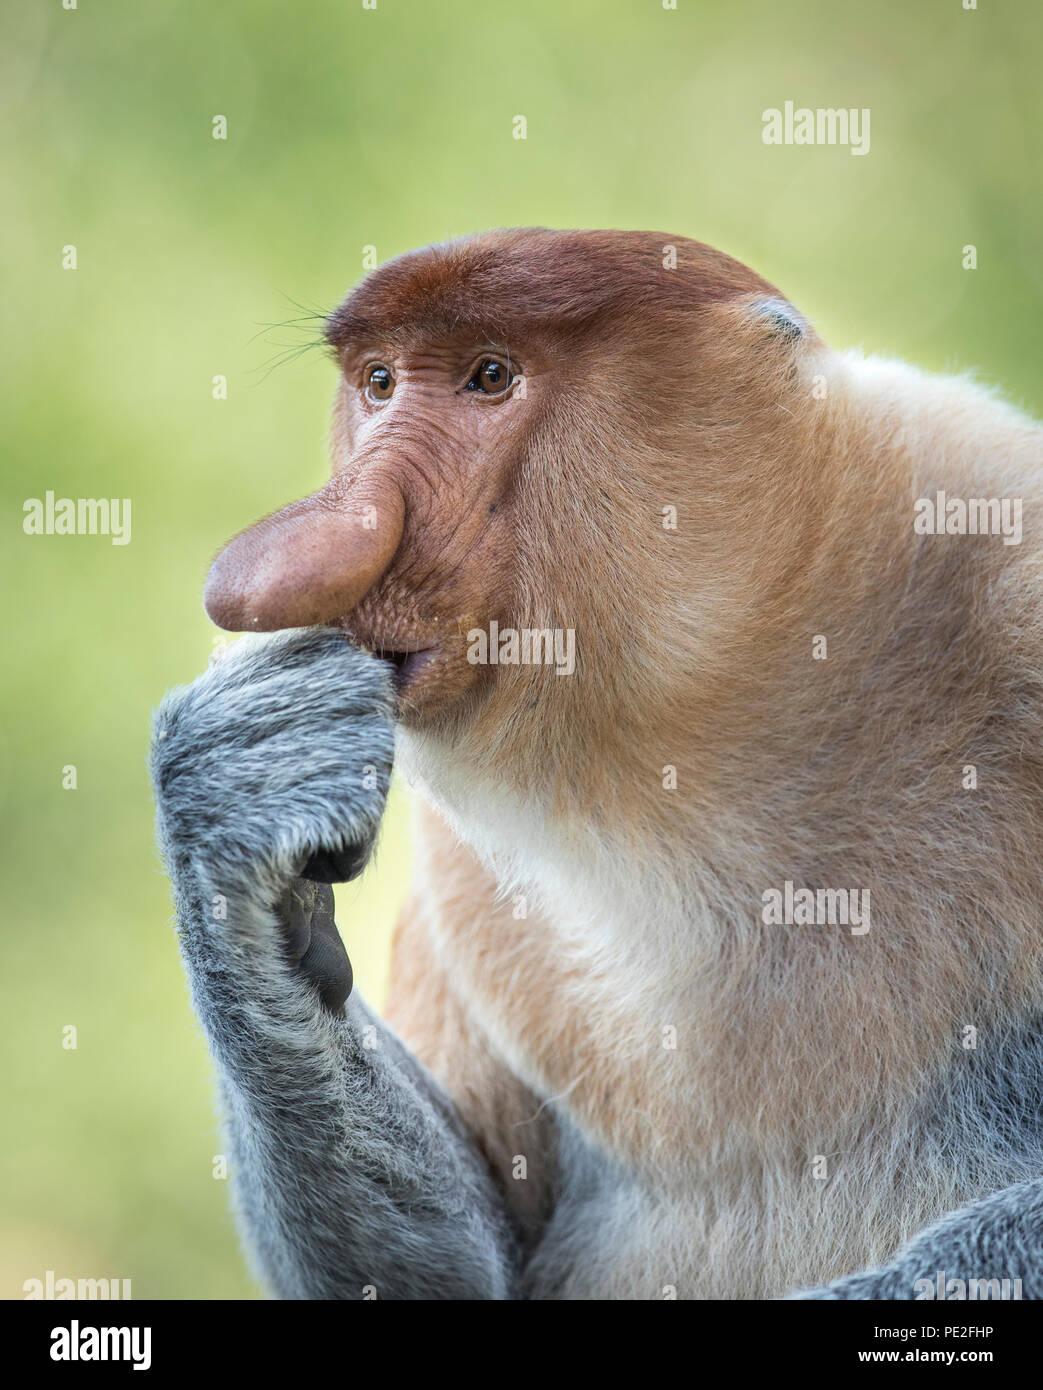 Meme Monkey Stock Photos - Free & Royalty-Free Stock Photos from